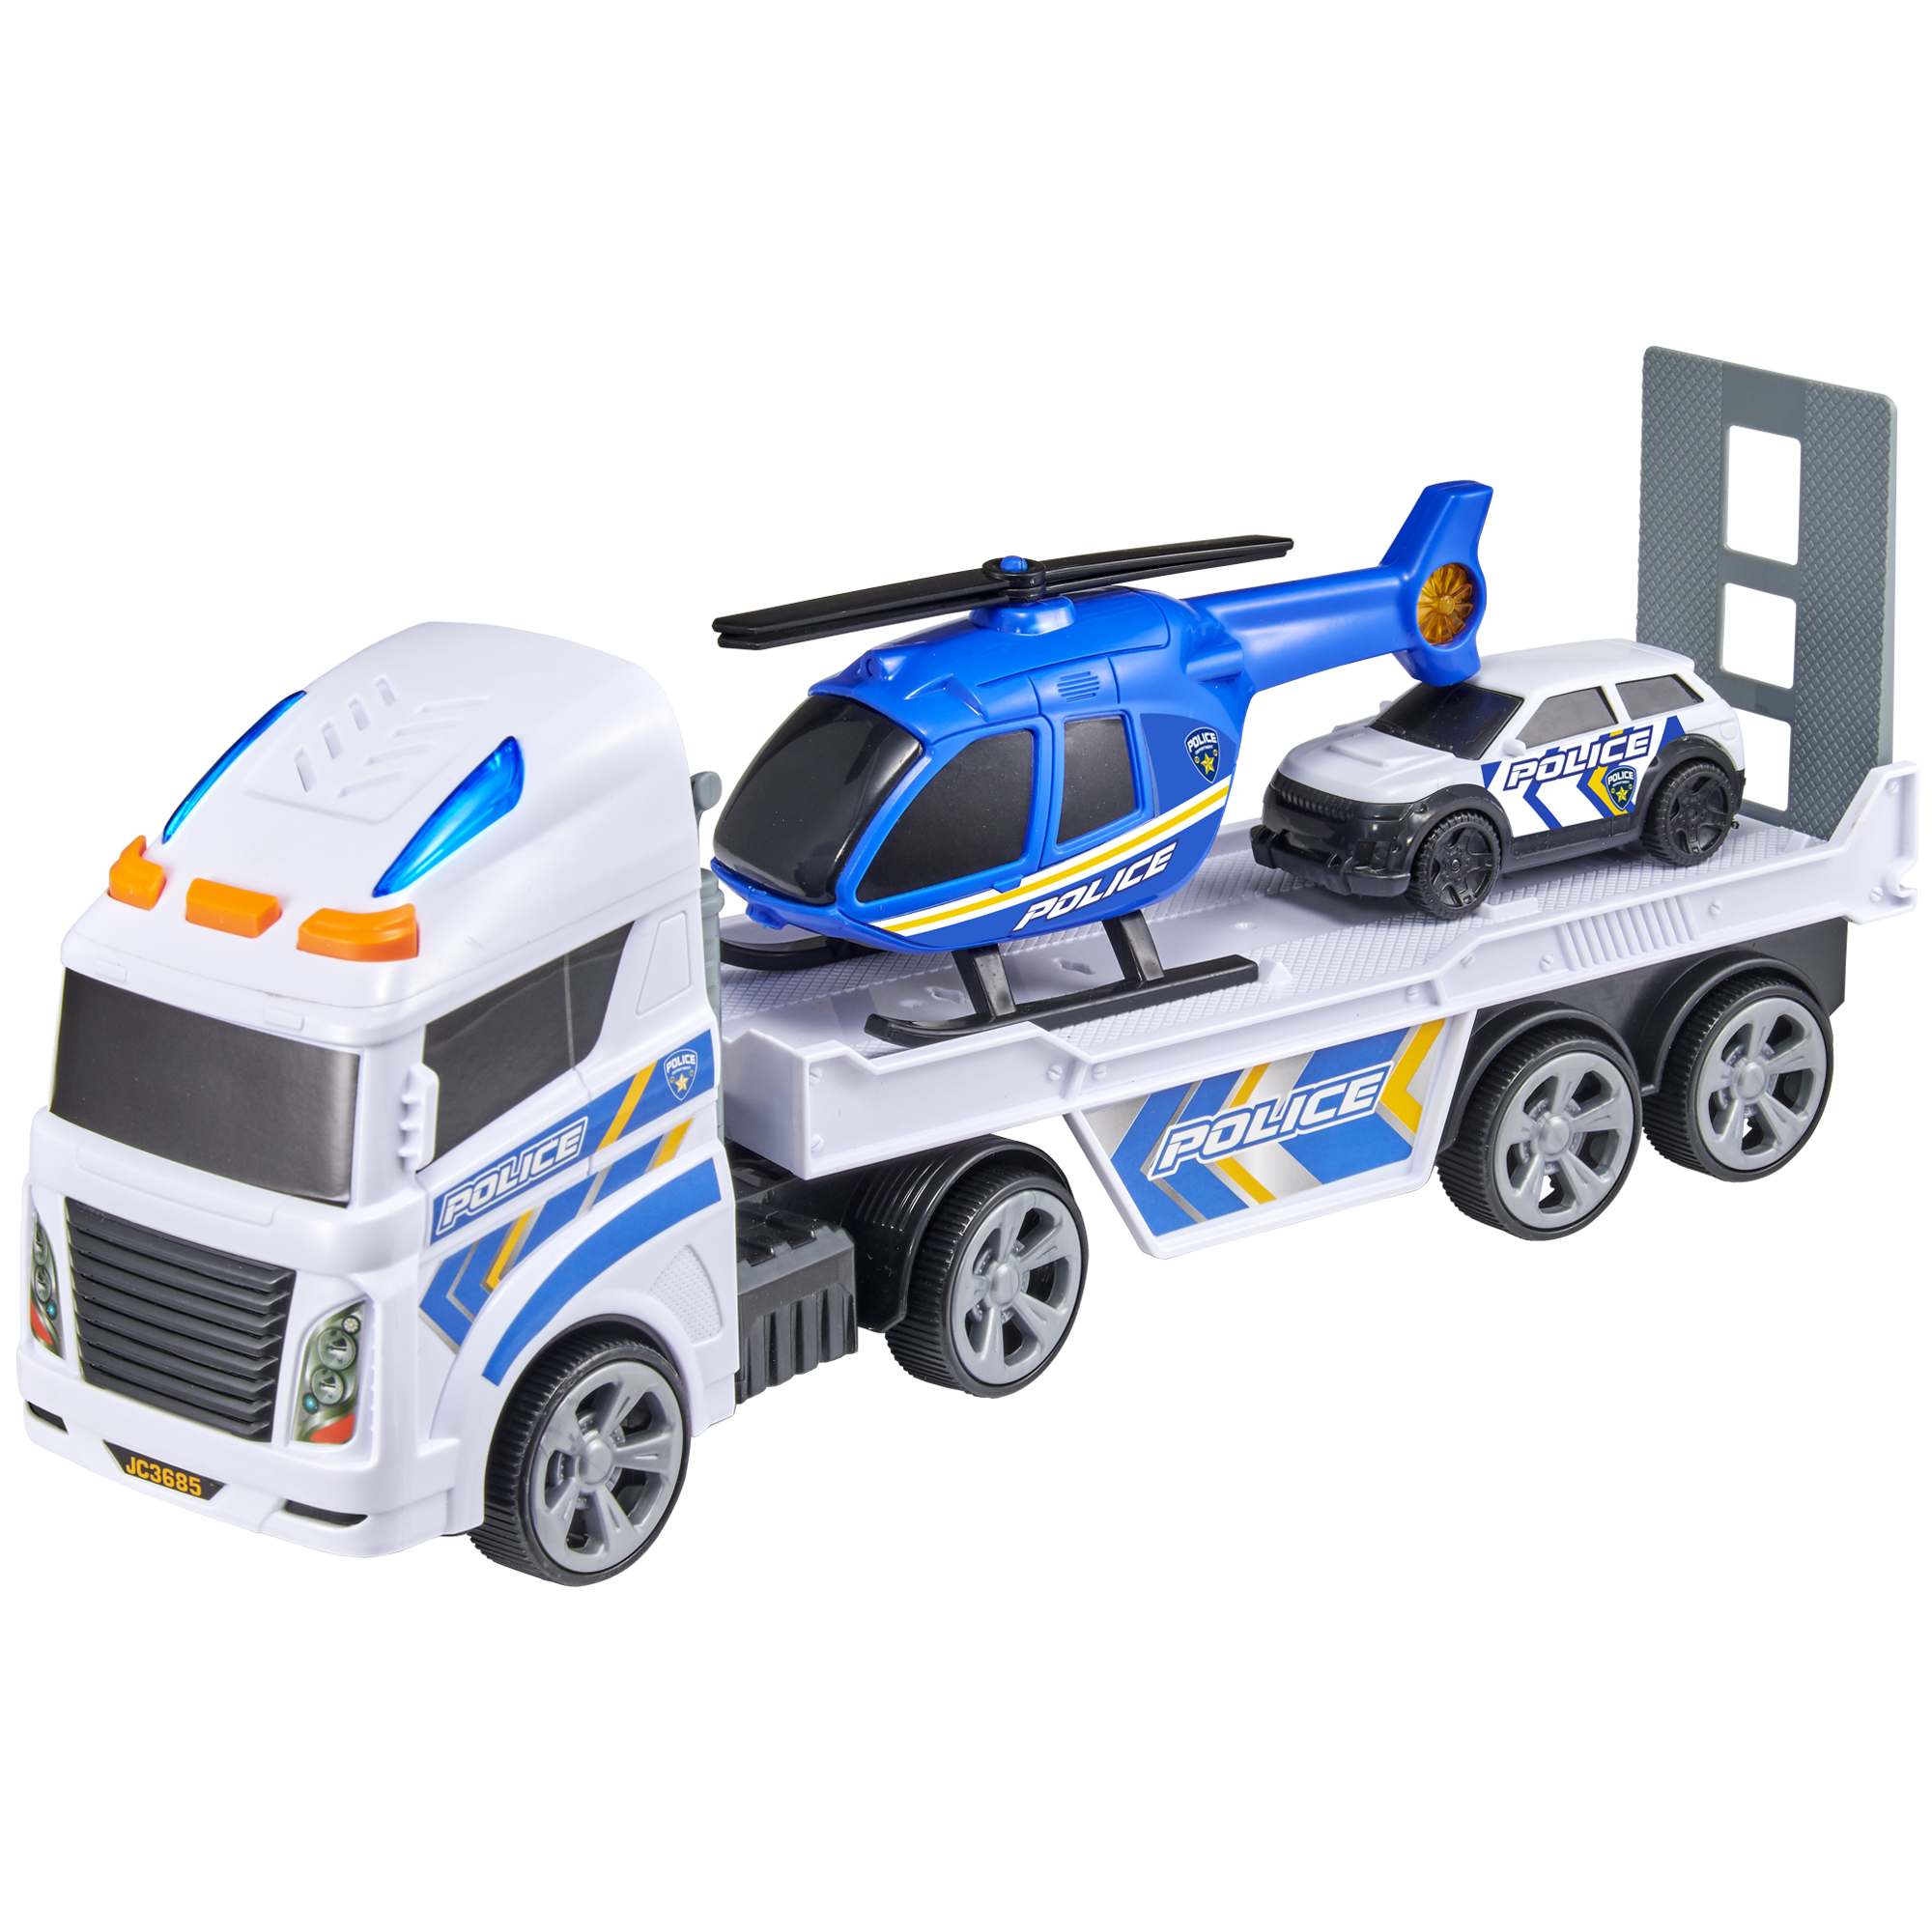 Police transporter - MOTOR & CO.